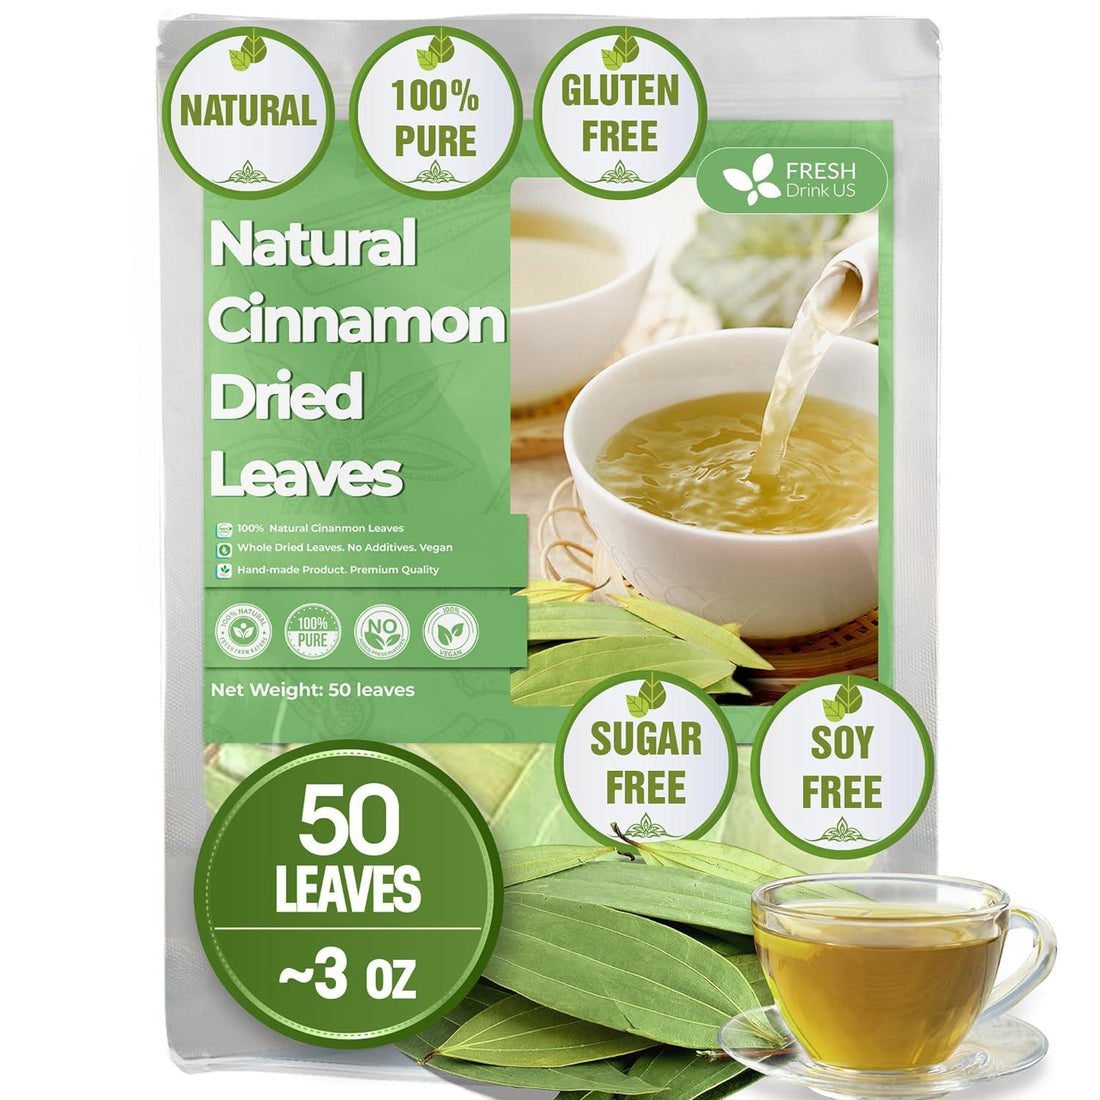 Natural Cinnamon Leaves, Whole Dried Cinnamon Leaves, Tea Bags, 100% Pure from Dried Cinnamon Leaves, Cinnamon Leaf Tea, No Additives, No Caffeine, Vegan - FreshDrinkUS - Natural and Premium Herbal Tea